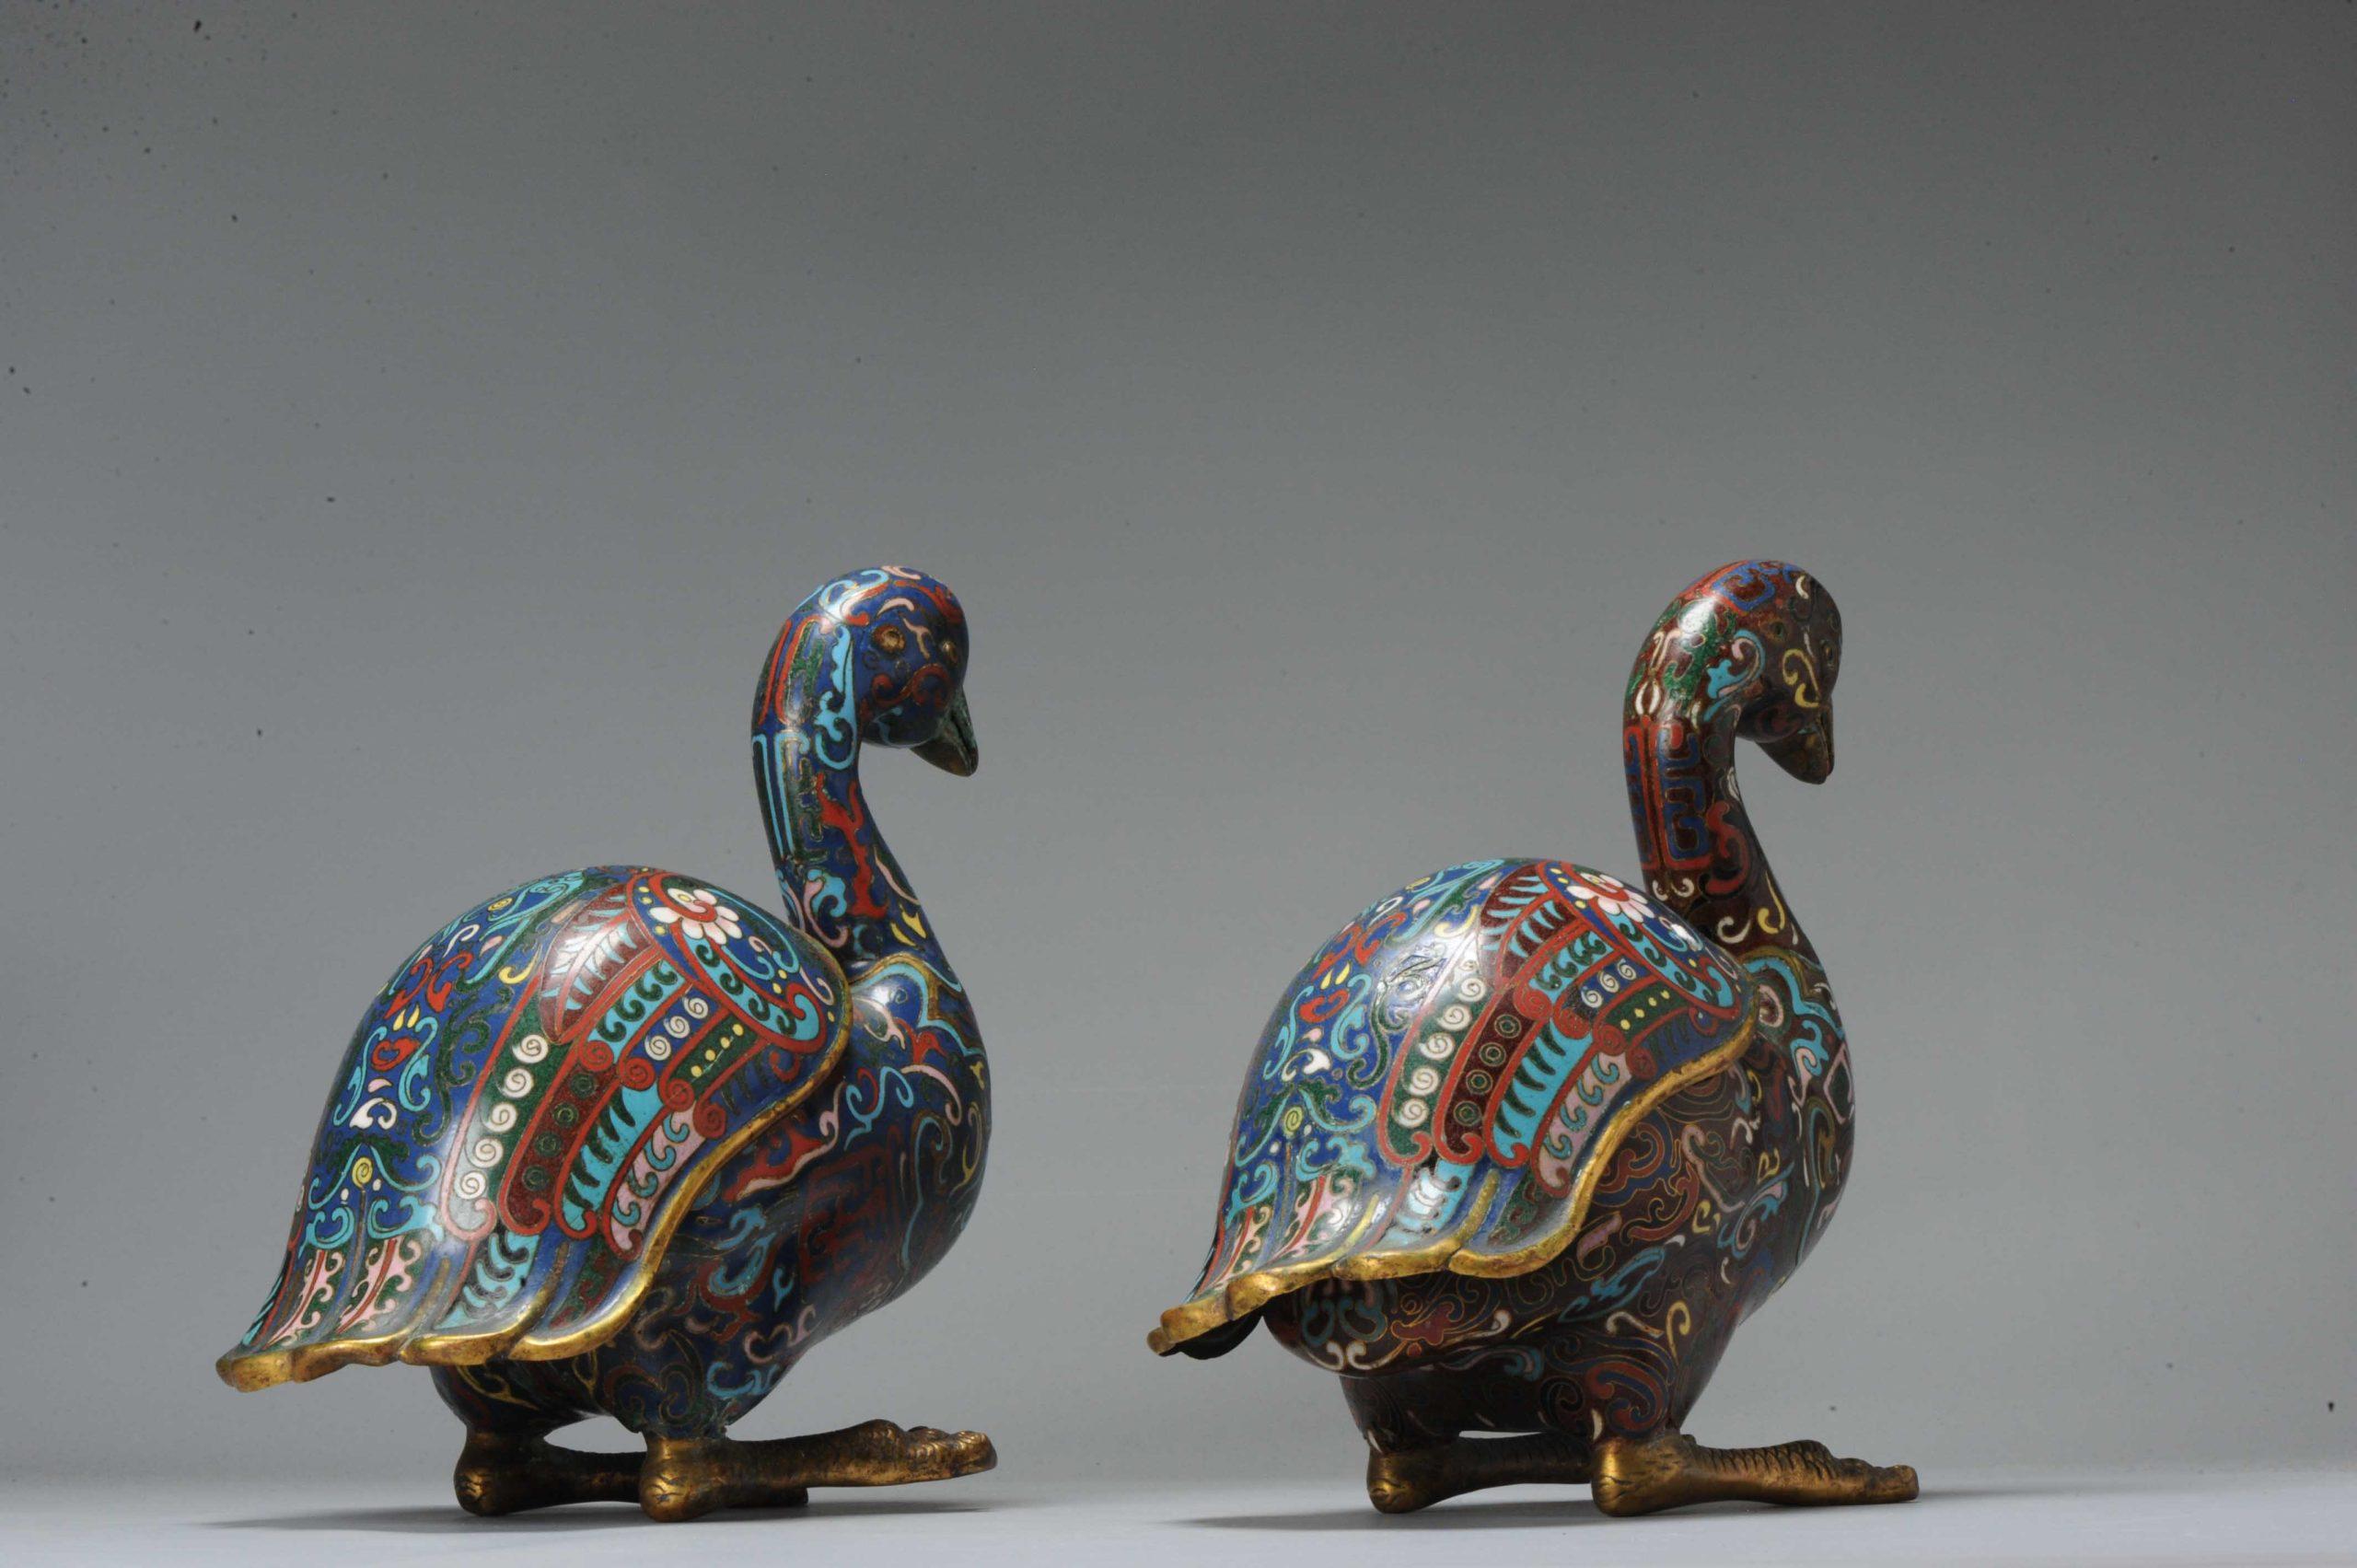 Antique Bronze / Copper Cloisonné Burner Inscense Koro Geese or Swan For Sale 7